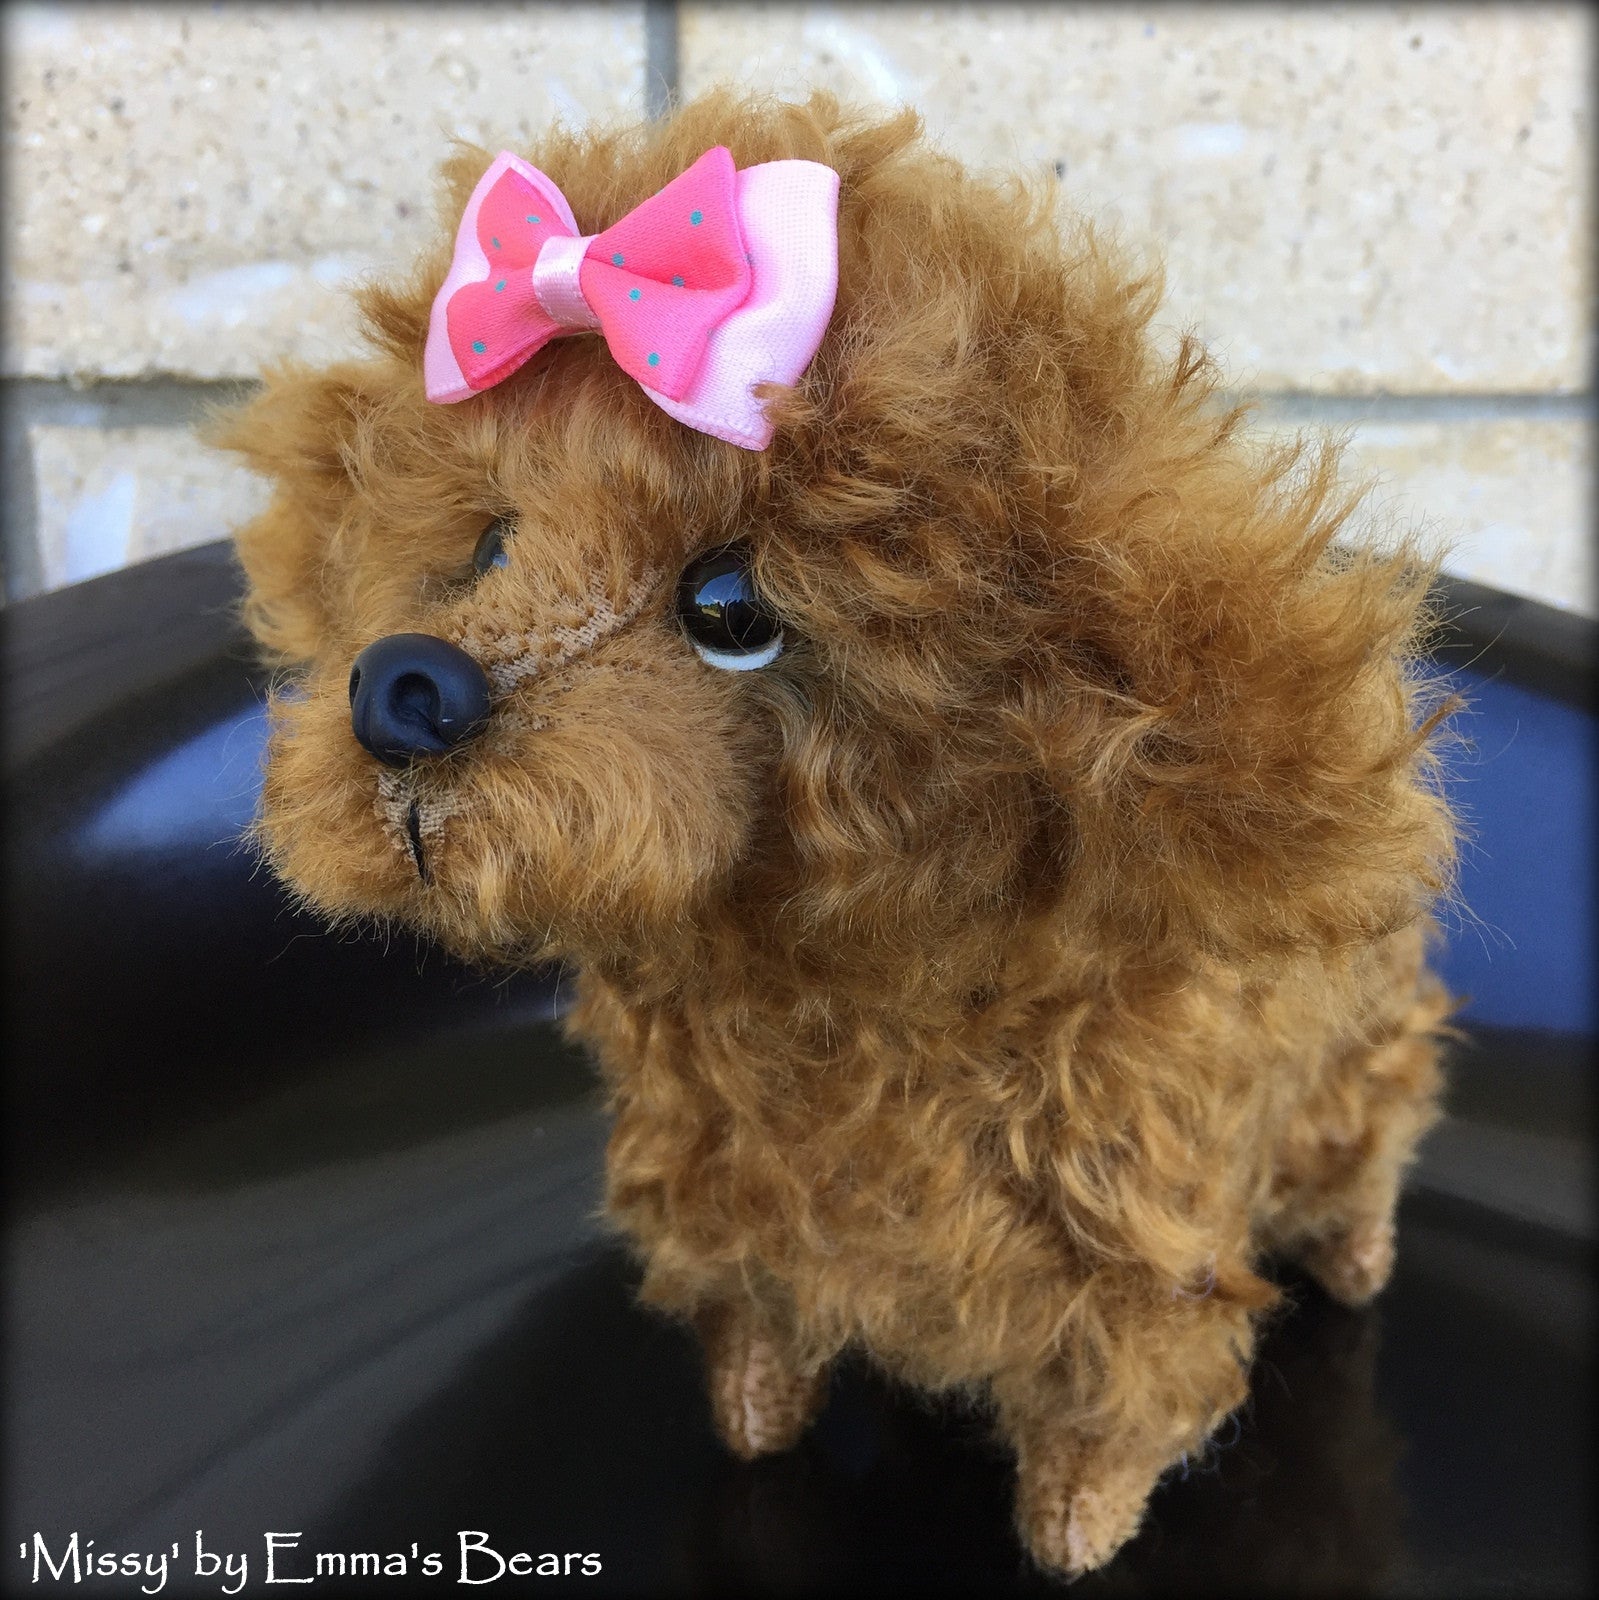 Missy Pup - 8IN mohair puppy soft sculpture by Emmas Bears - OOAK